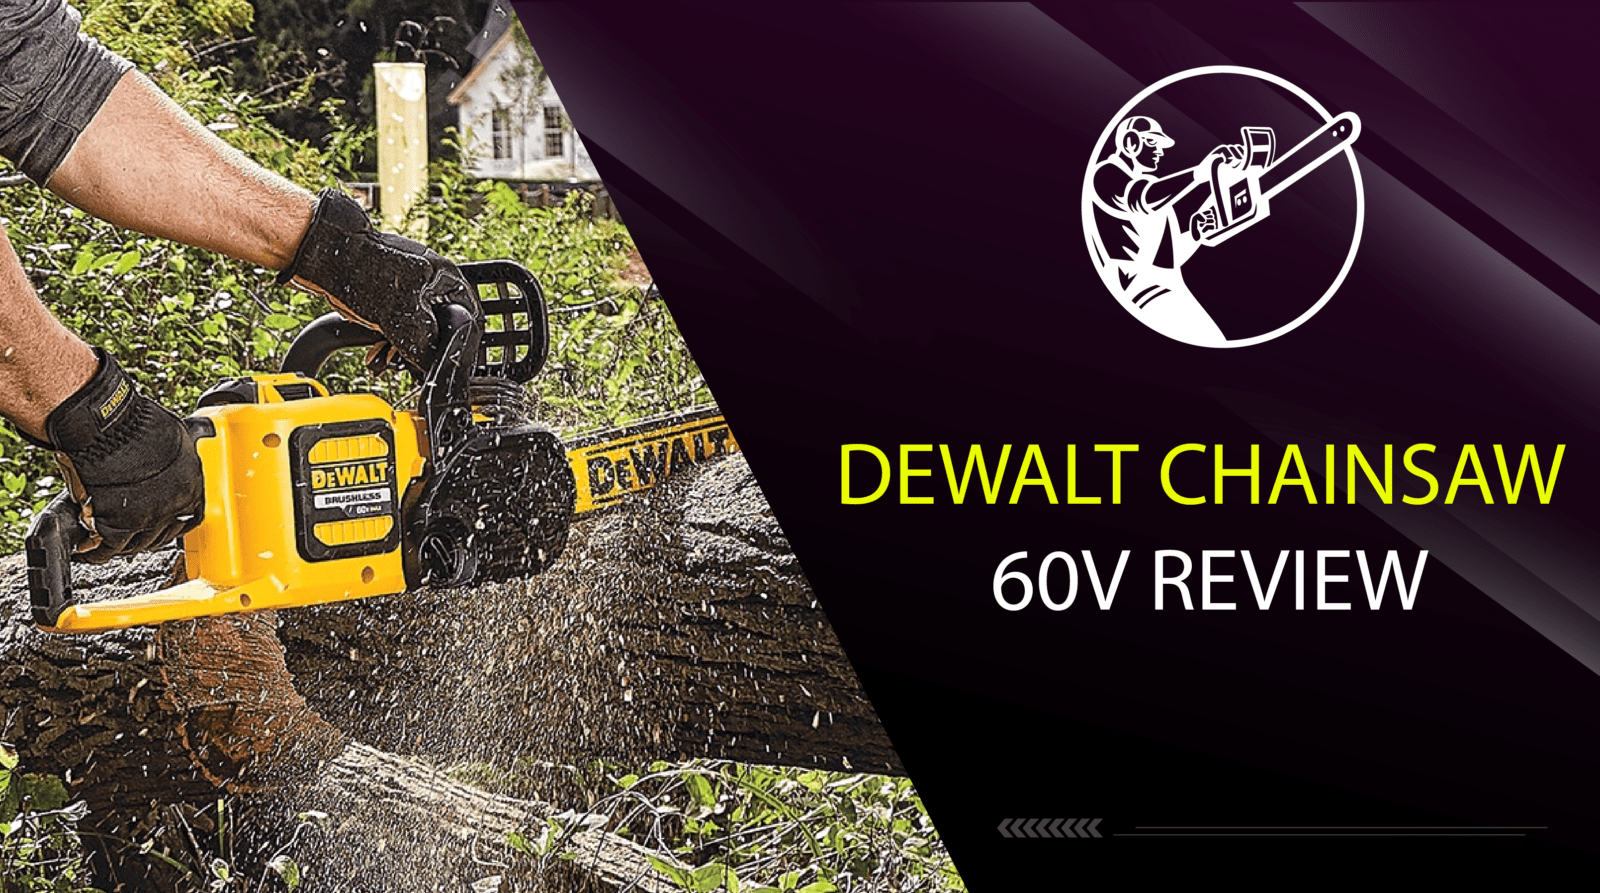 Dewalt Chainsaw 60V Review – Powerful Cutting & Sharp Chain